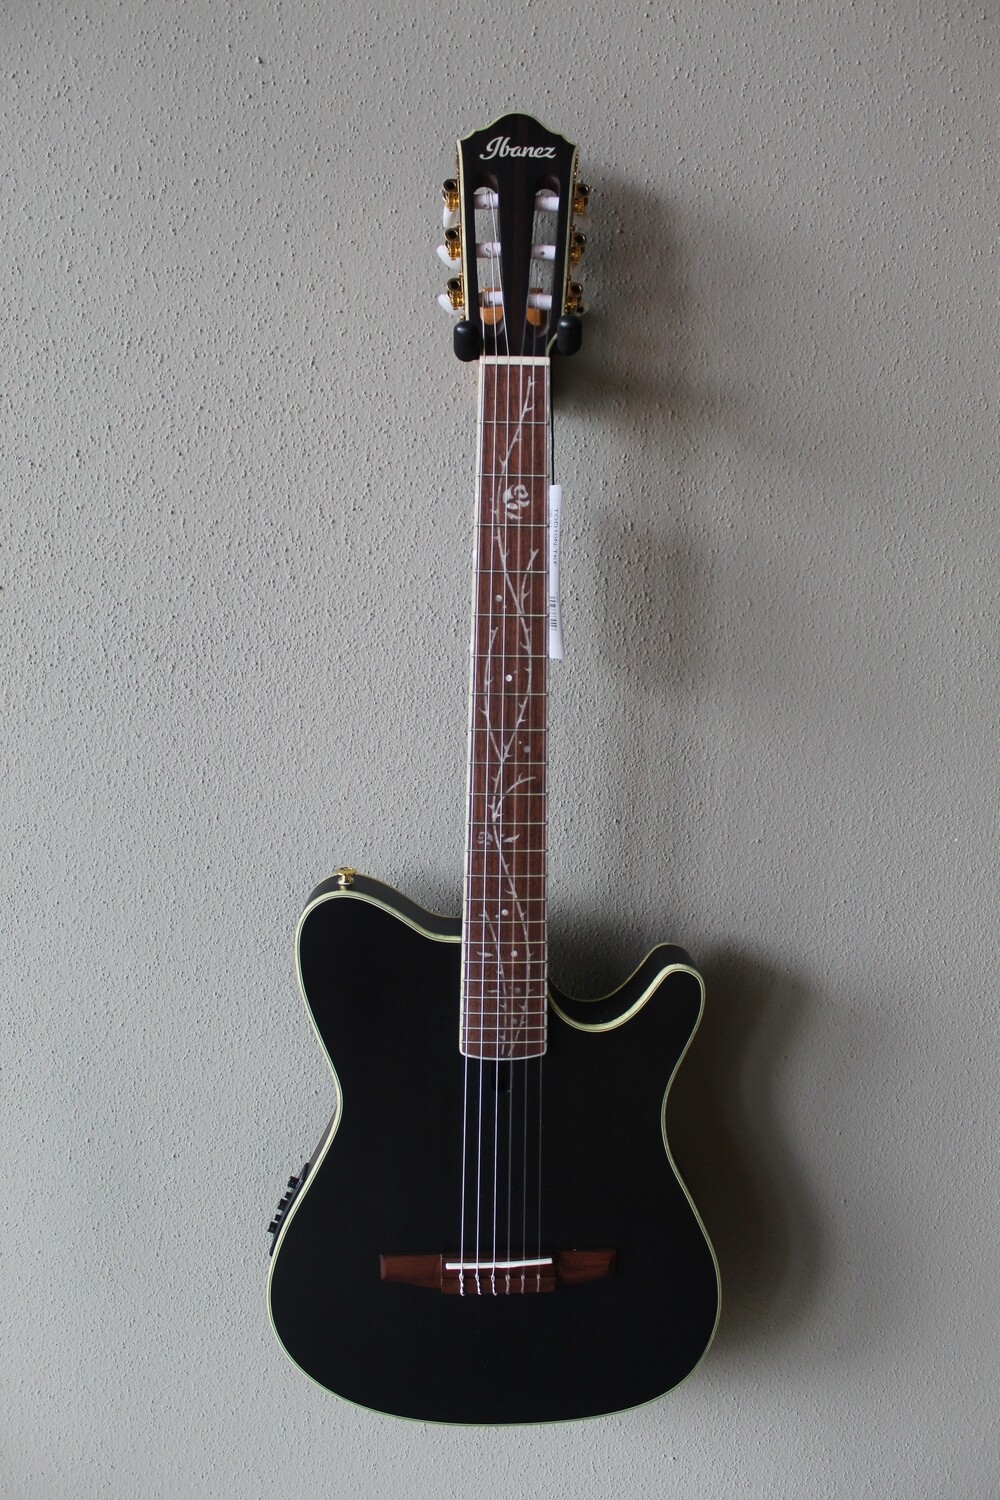 Ibanez TOD10N Tim Henson Signature Acoustic/Electric Nylon String Guitar - Black